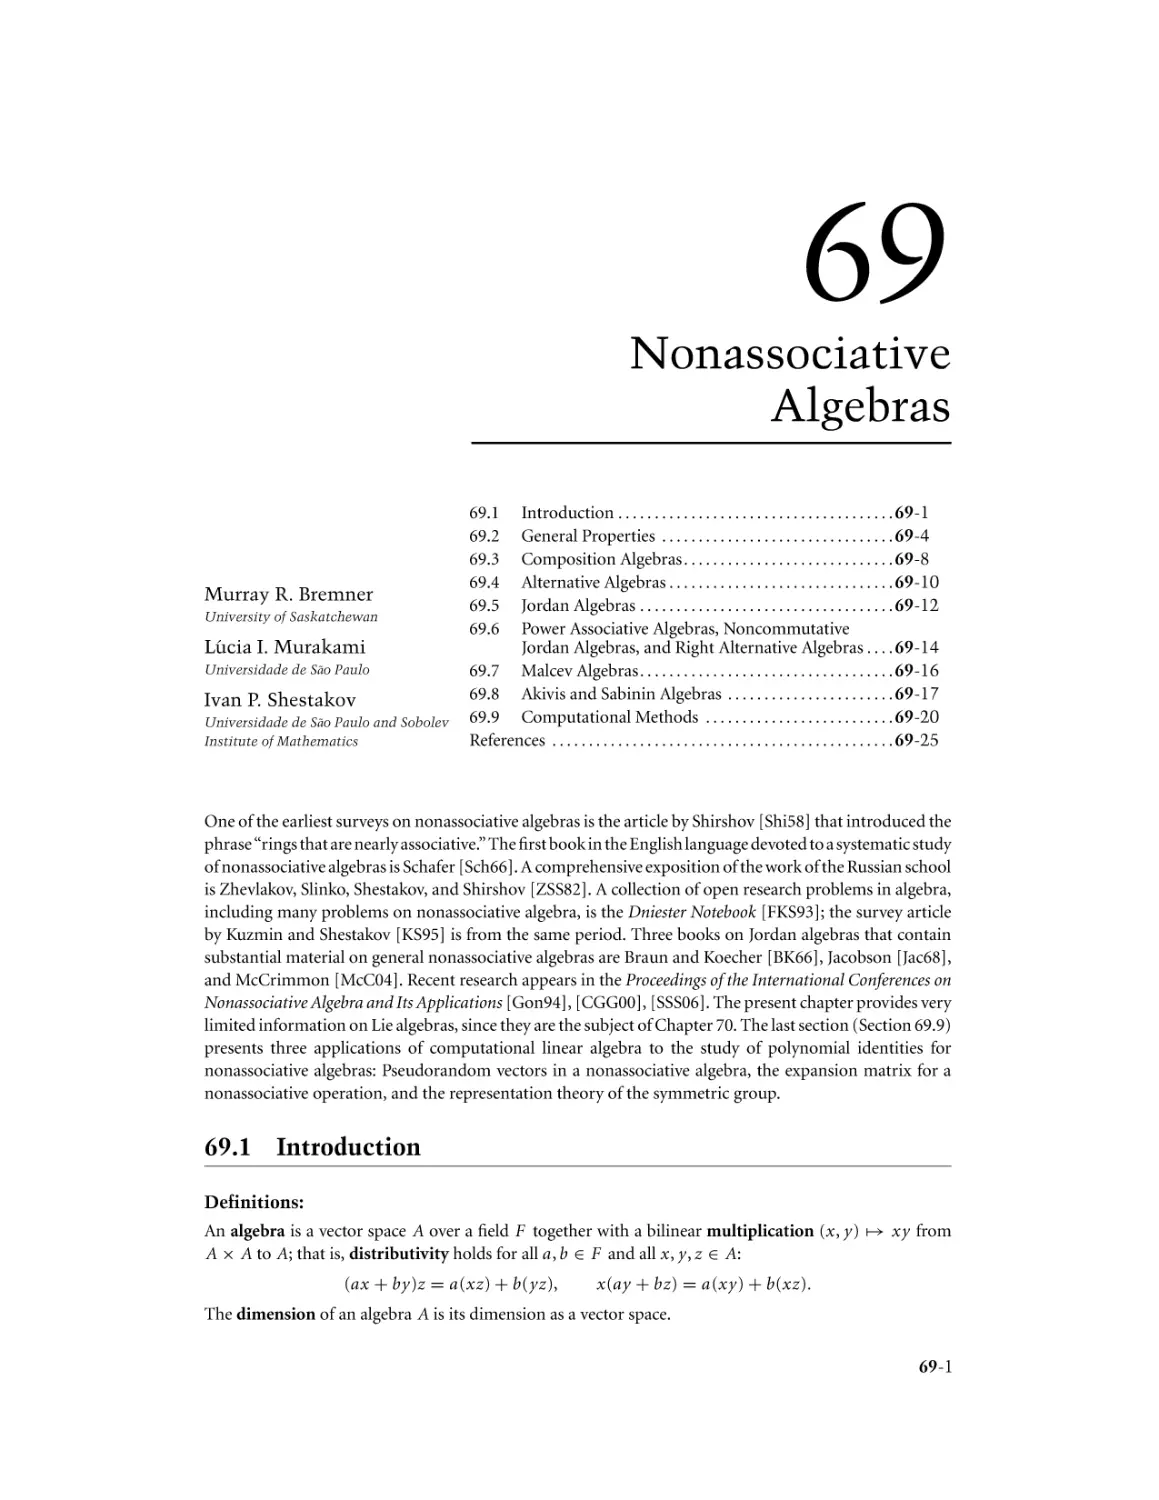 Chapter 69. Nonassociative Algebras